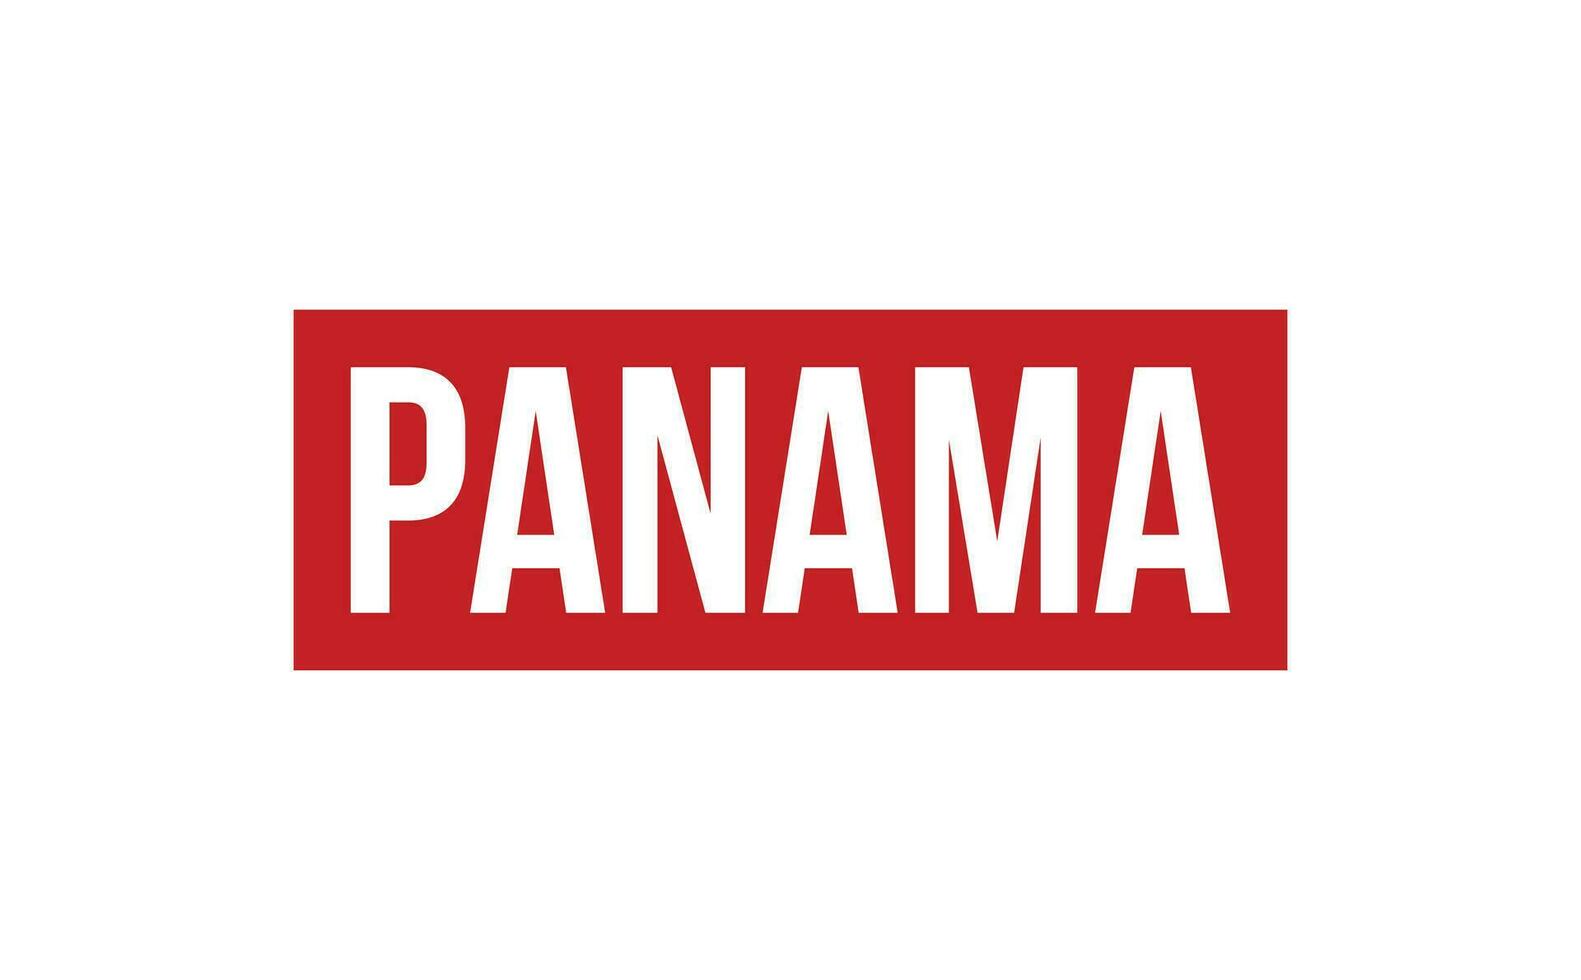 Panama rubber postzegel zegel vector